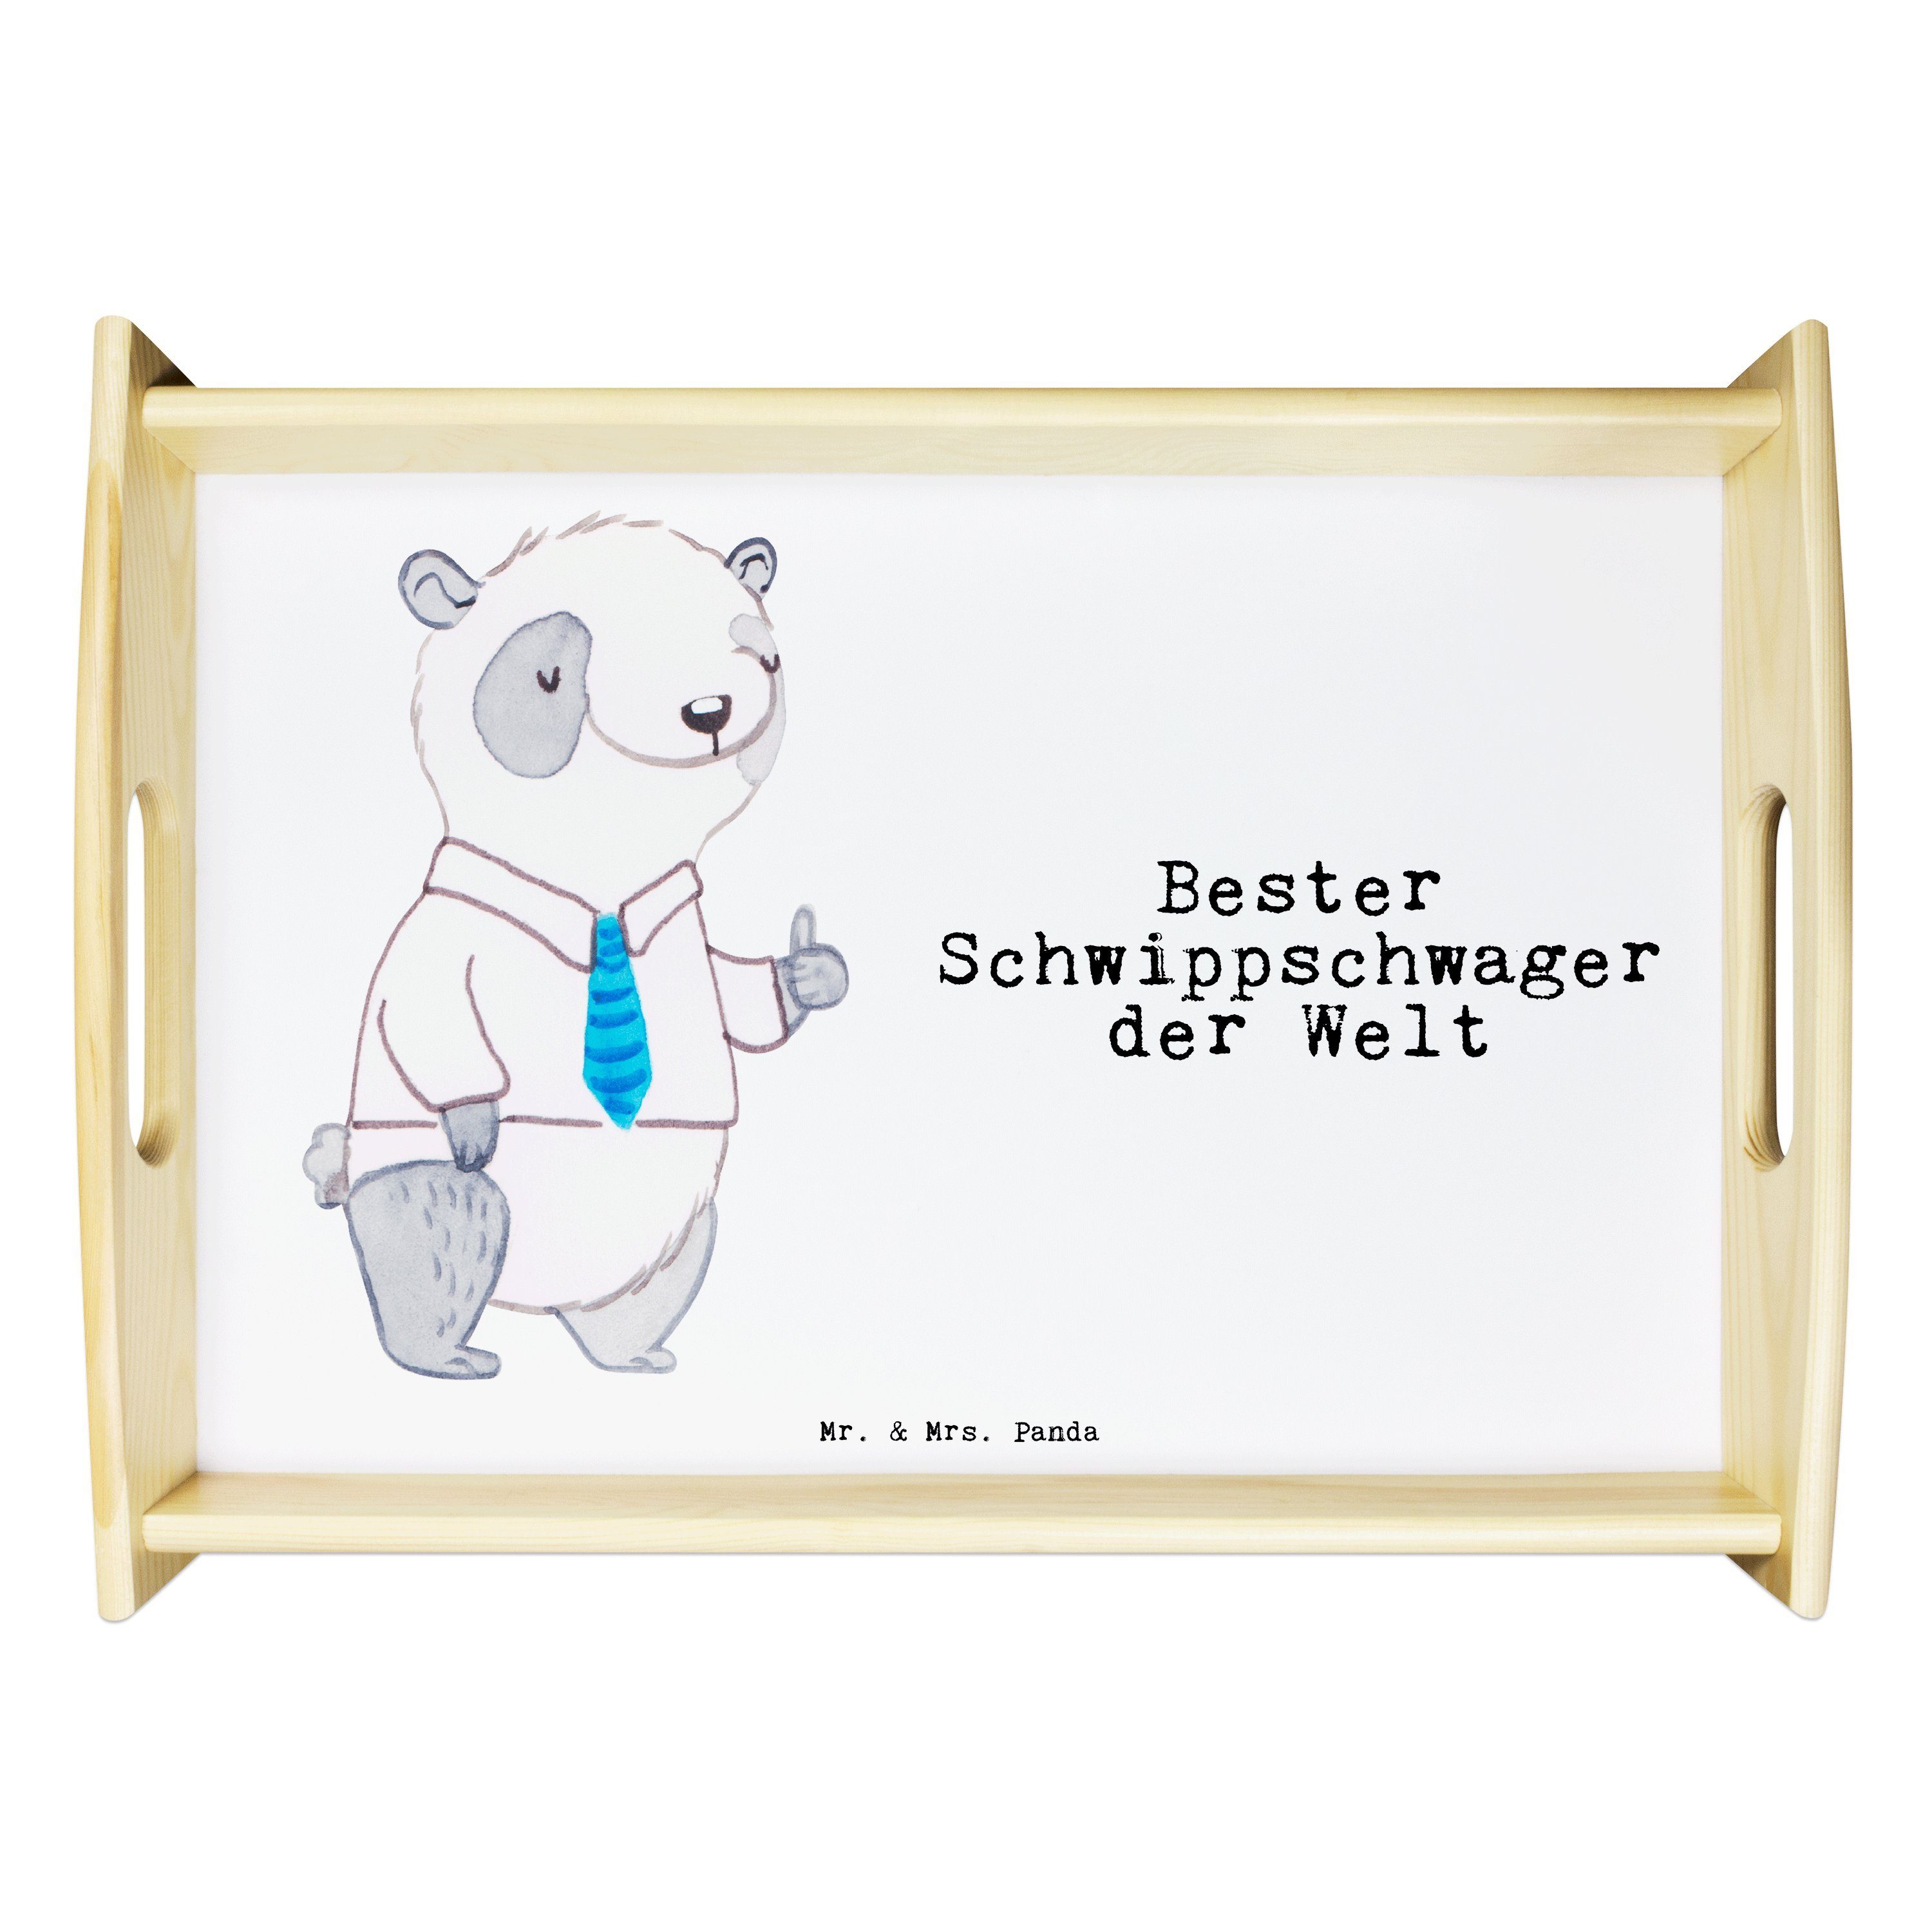 Schen, Schwippschwager Panda Tablett Echtholz lasiert, Geschenk, der (1-tlg) Mr. Mrs. - Bester Danke, Panda & - Welt Weiß